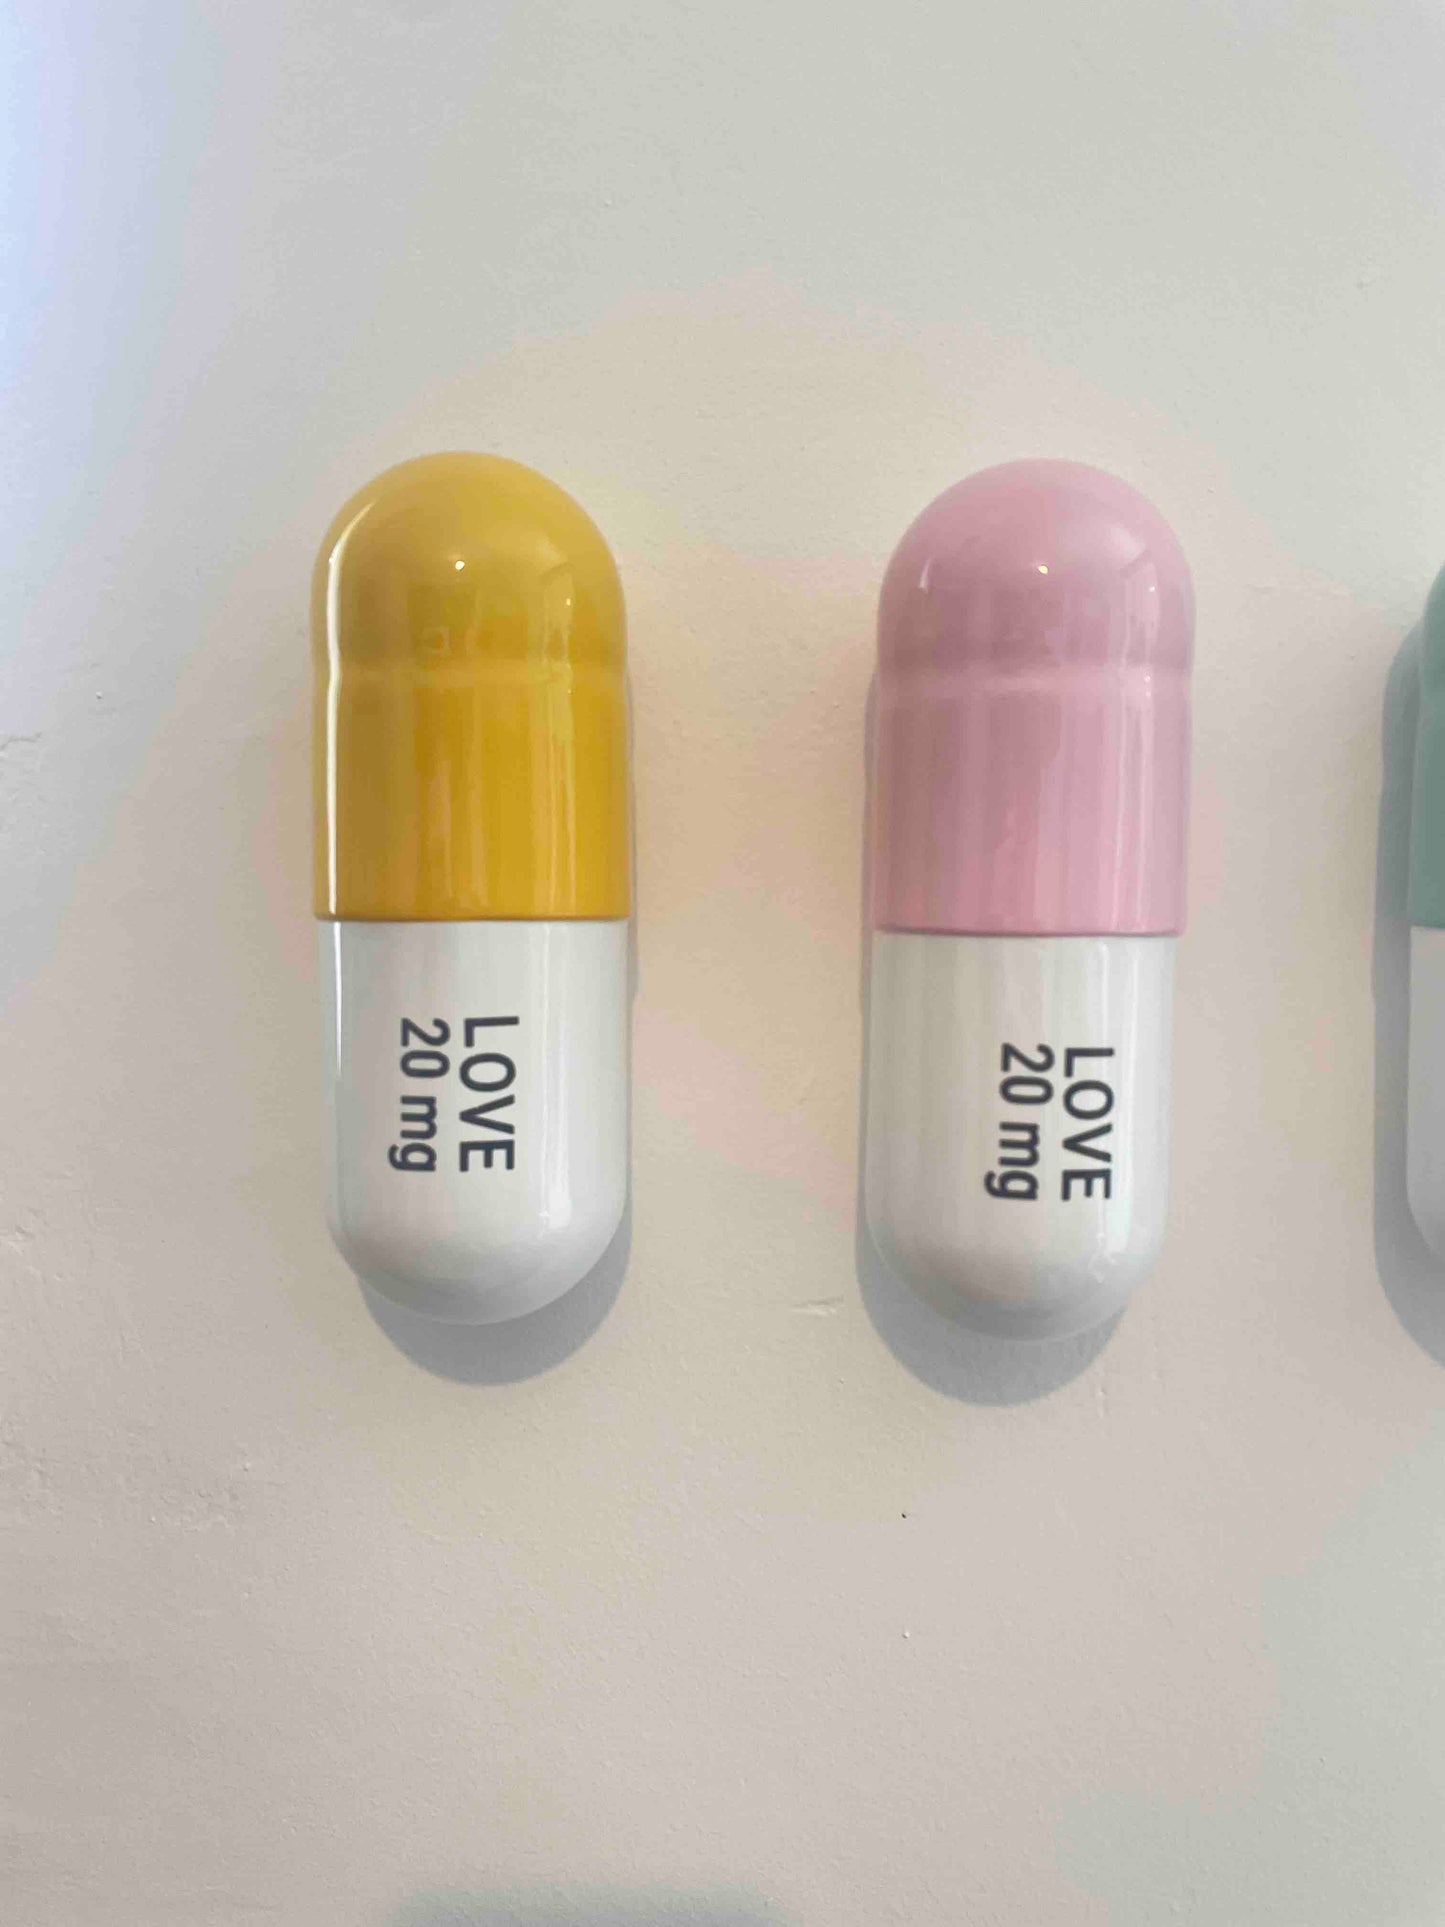 20 MG Love pill Combo (mint green, yellow and light pink) - figurative sculpture